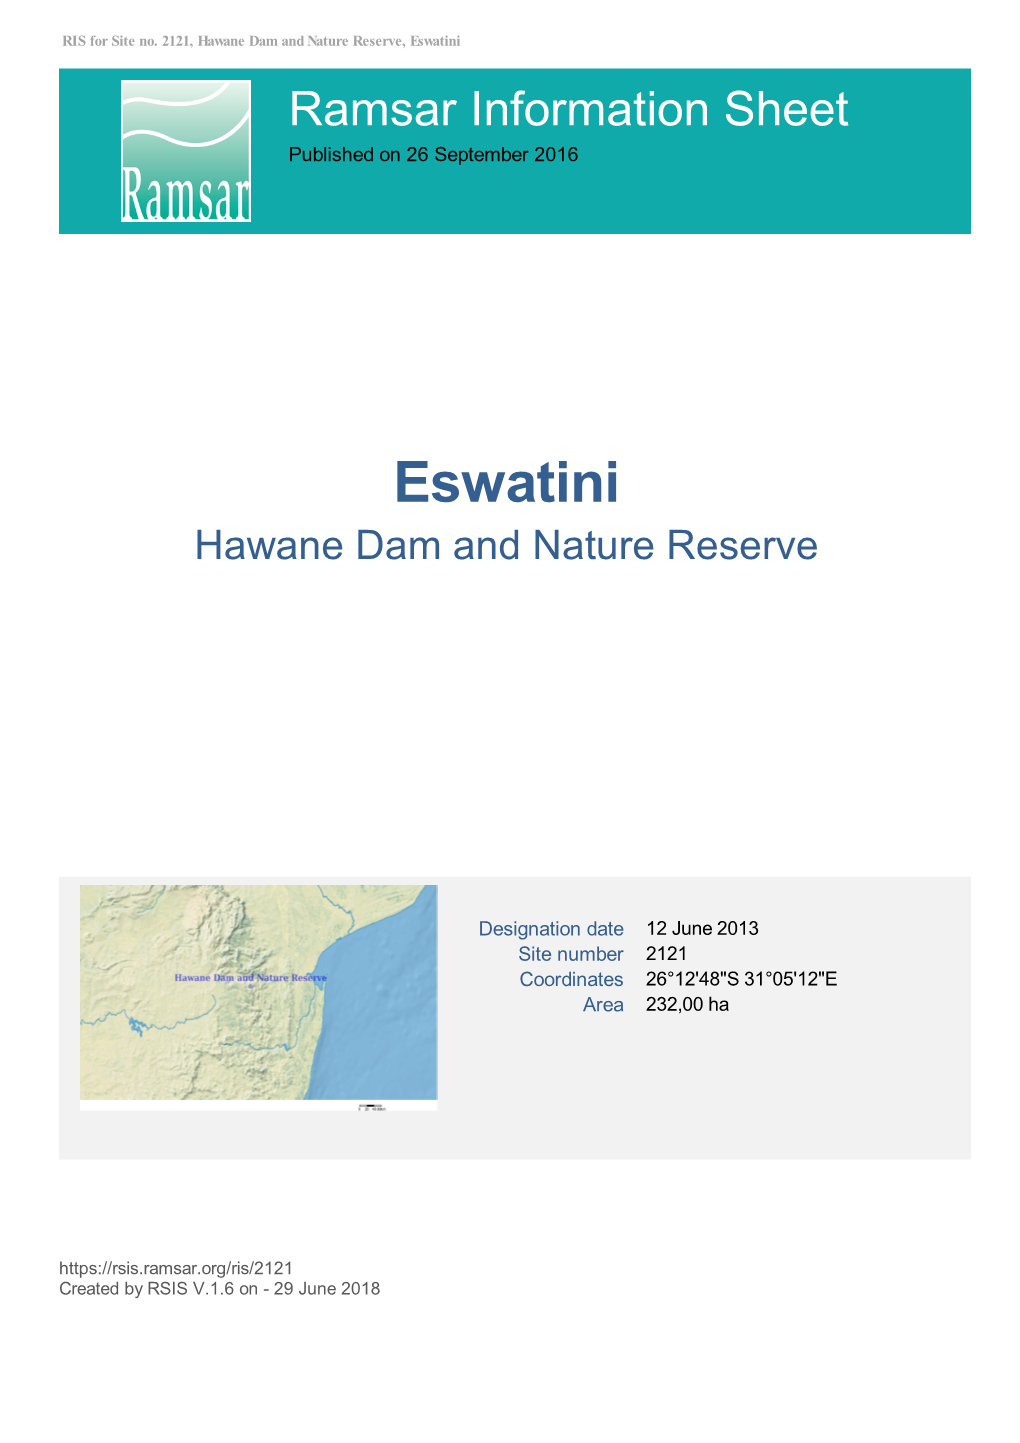 Eswatini Ramsar Information Sheet Published on 26 September 2016